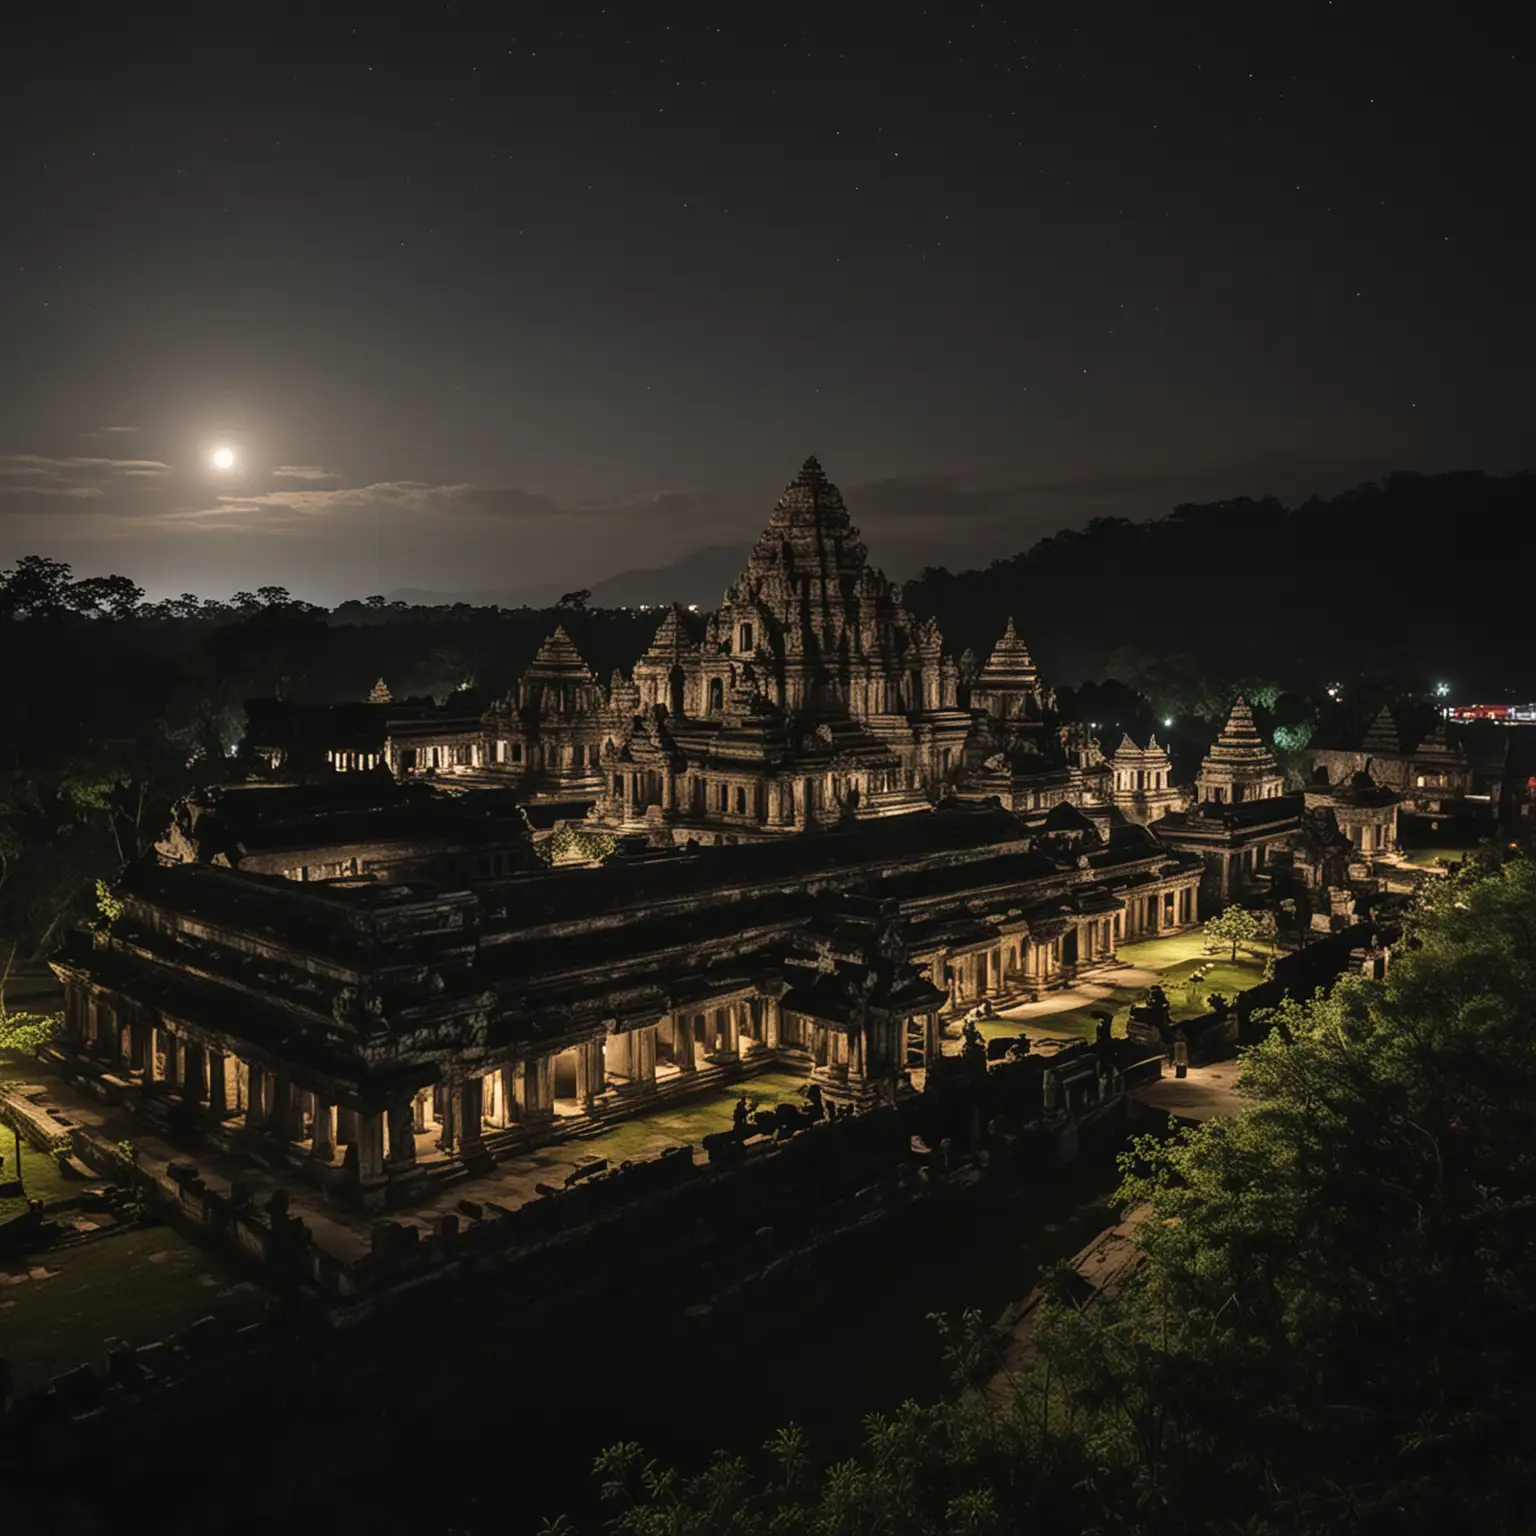 Nighttime-Illumination-of-Indonesias-Ancient-Stone-Temple-Palace